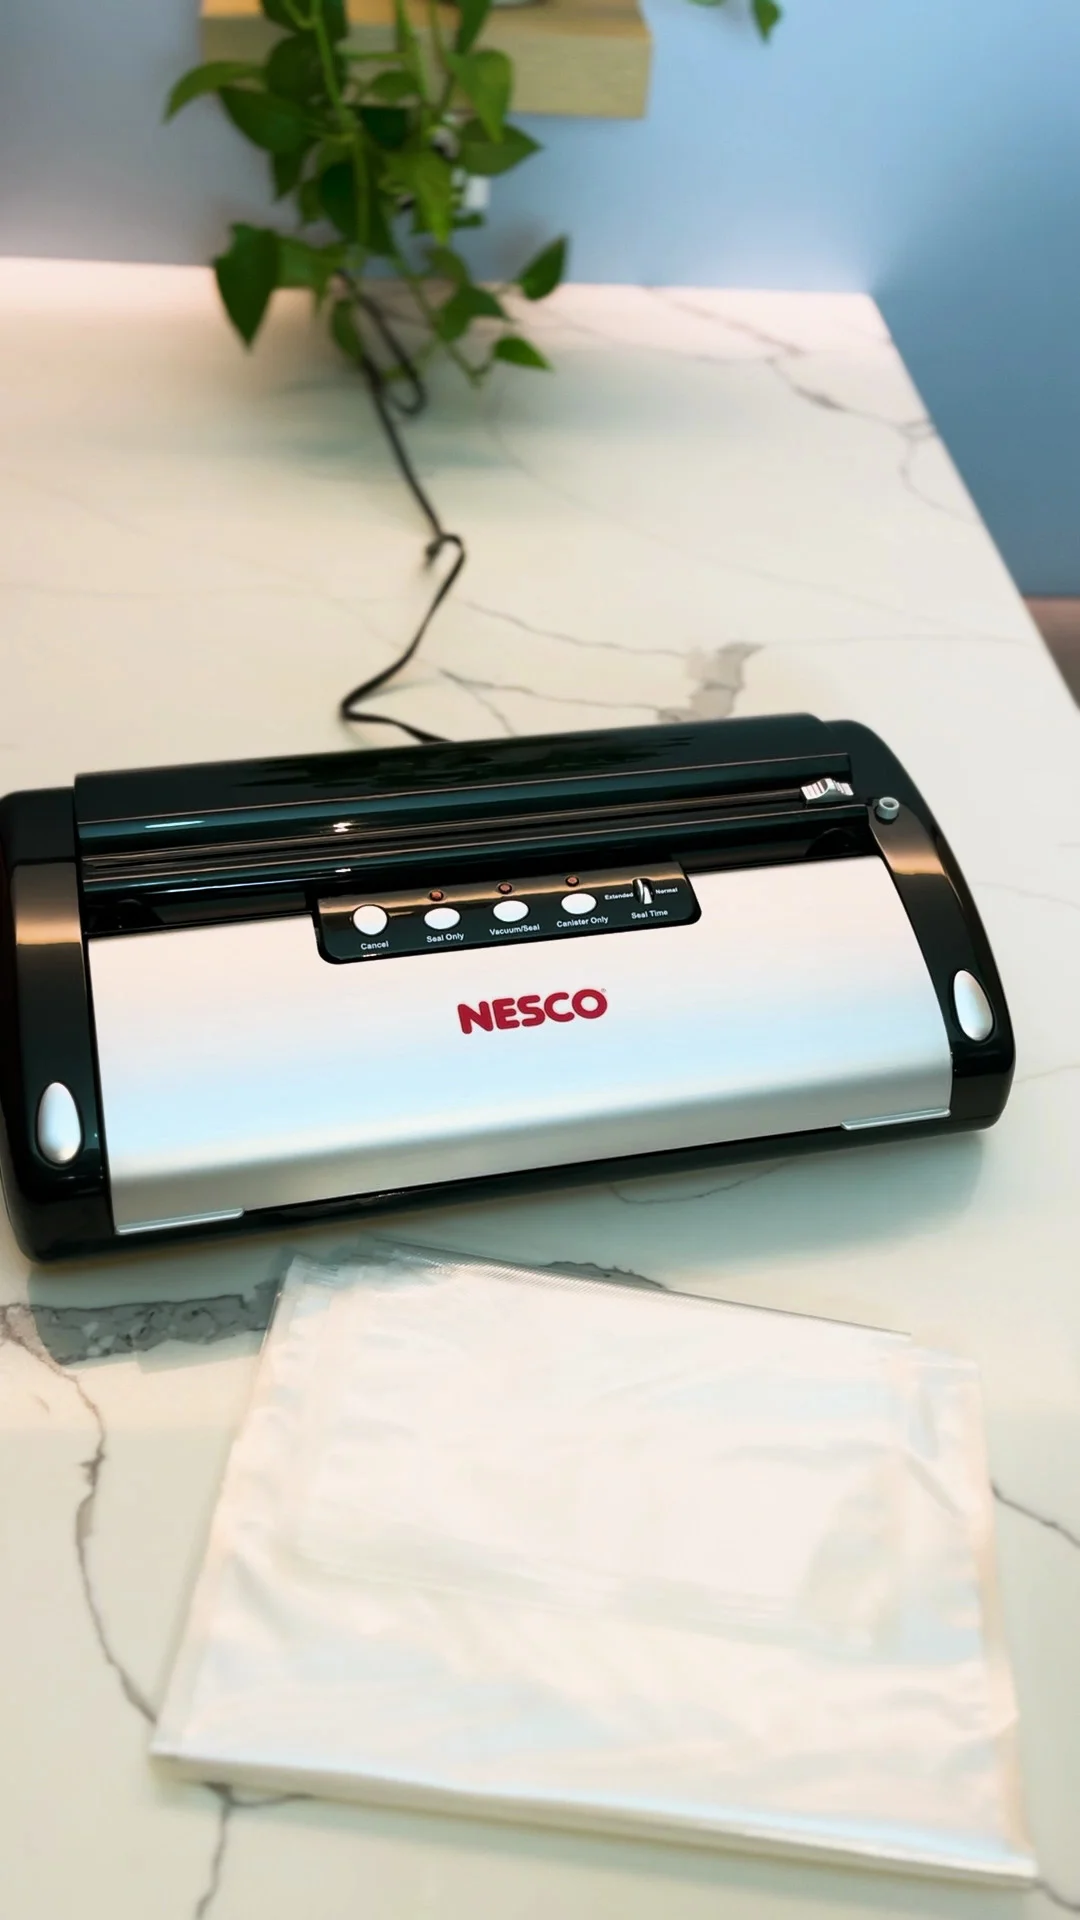 Nesco Heavy Duty Vacuum Sealer Bags- Quart 50 Count